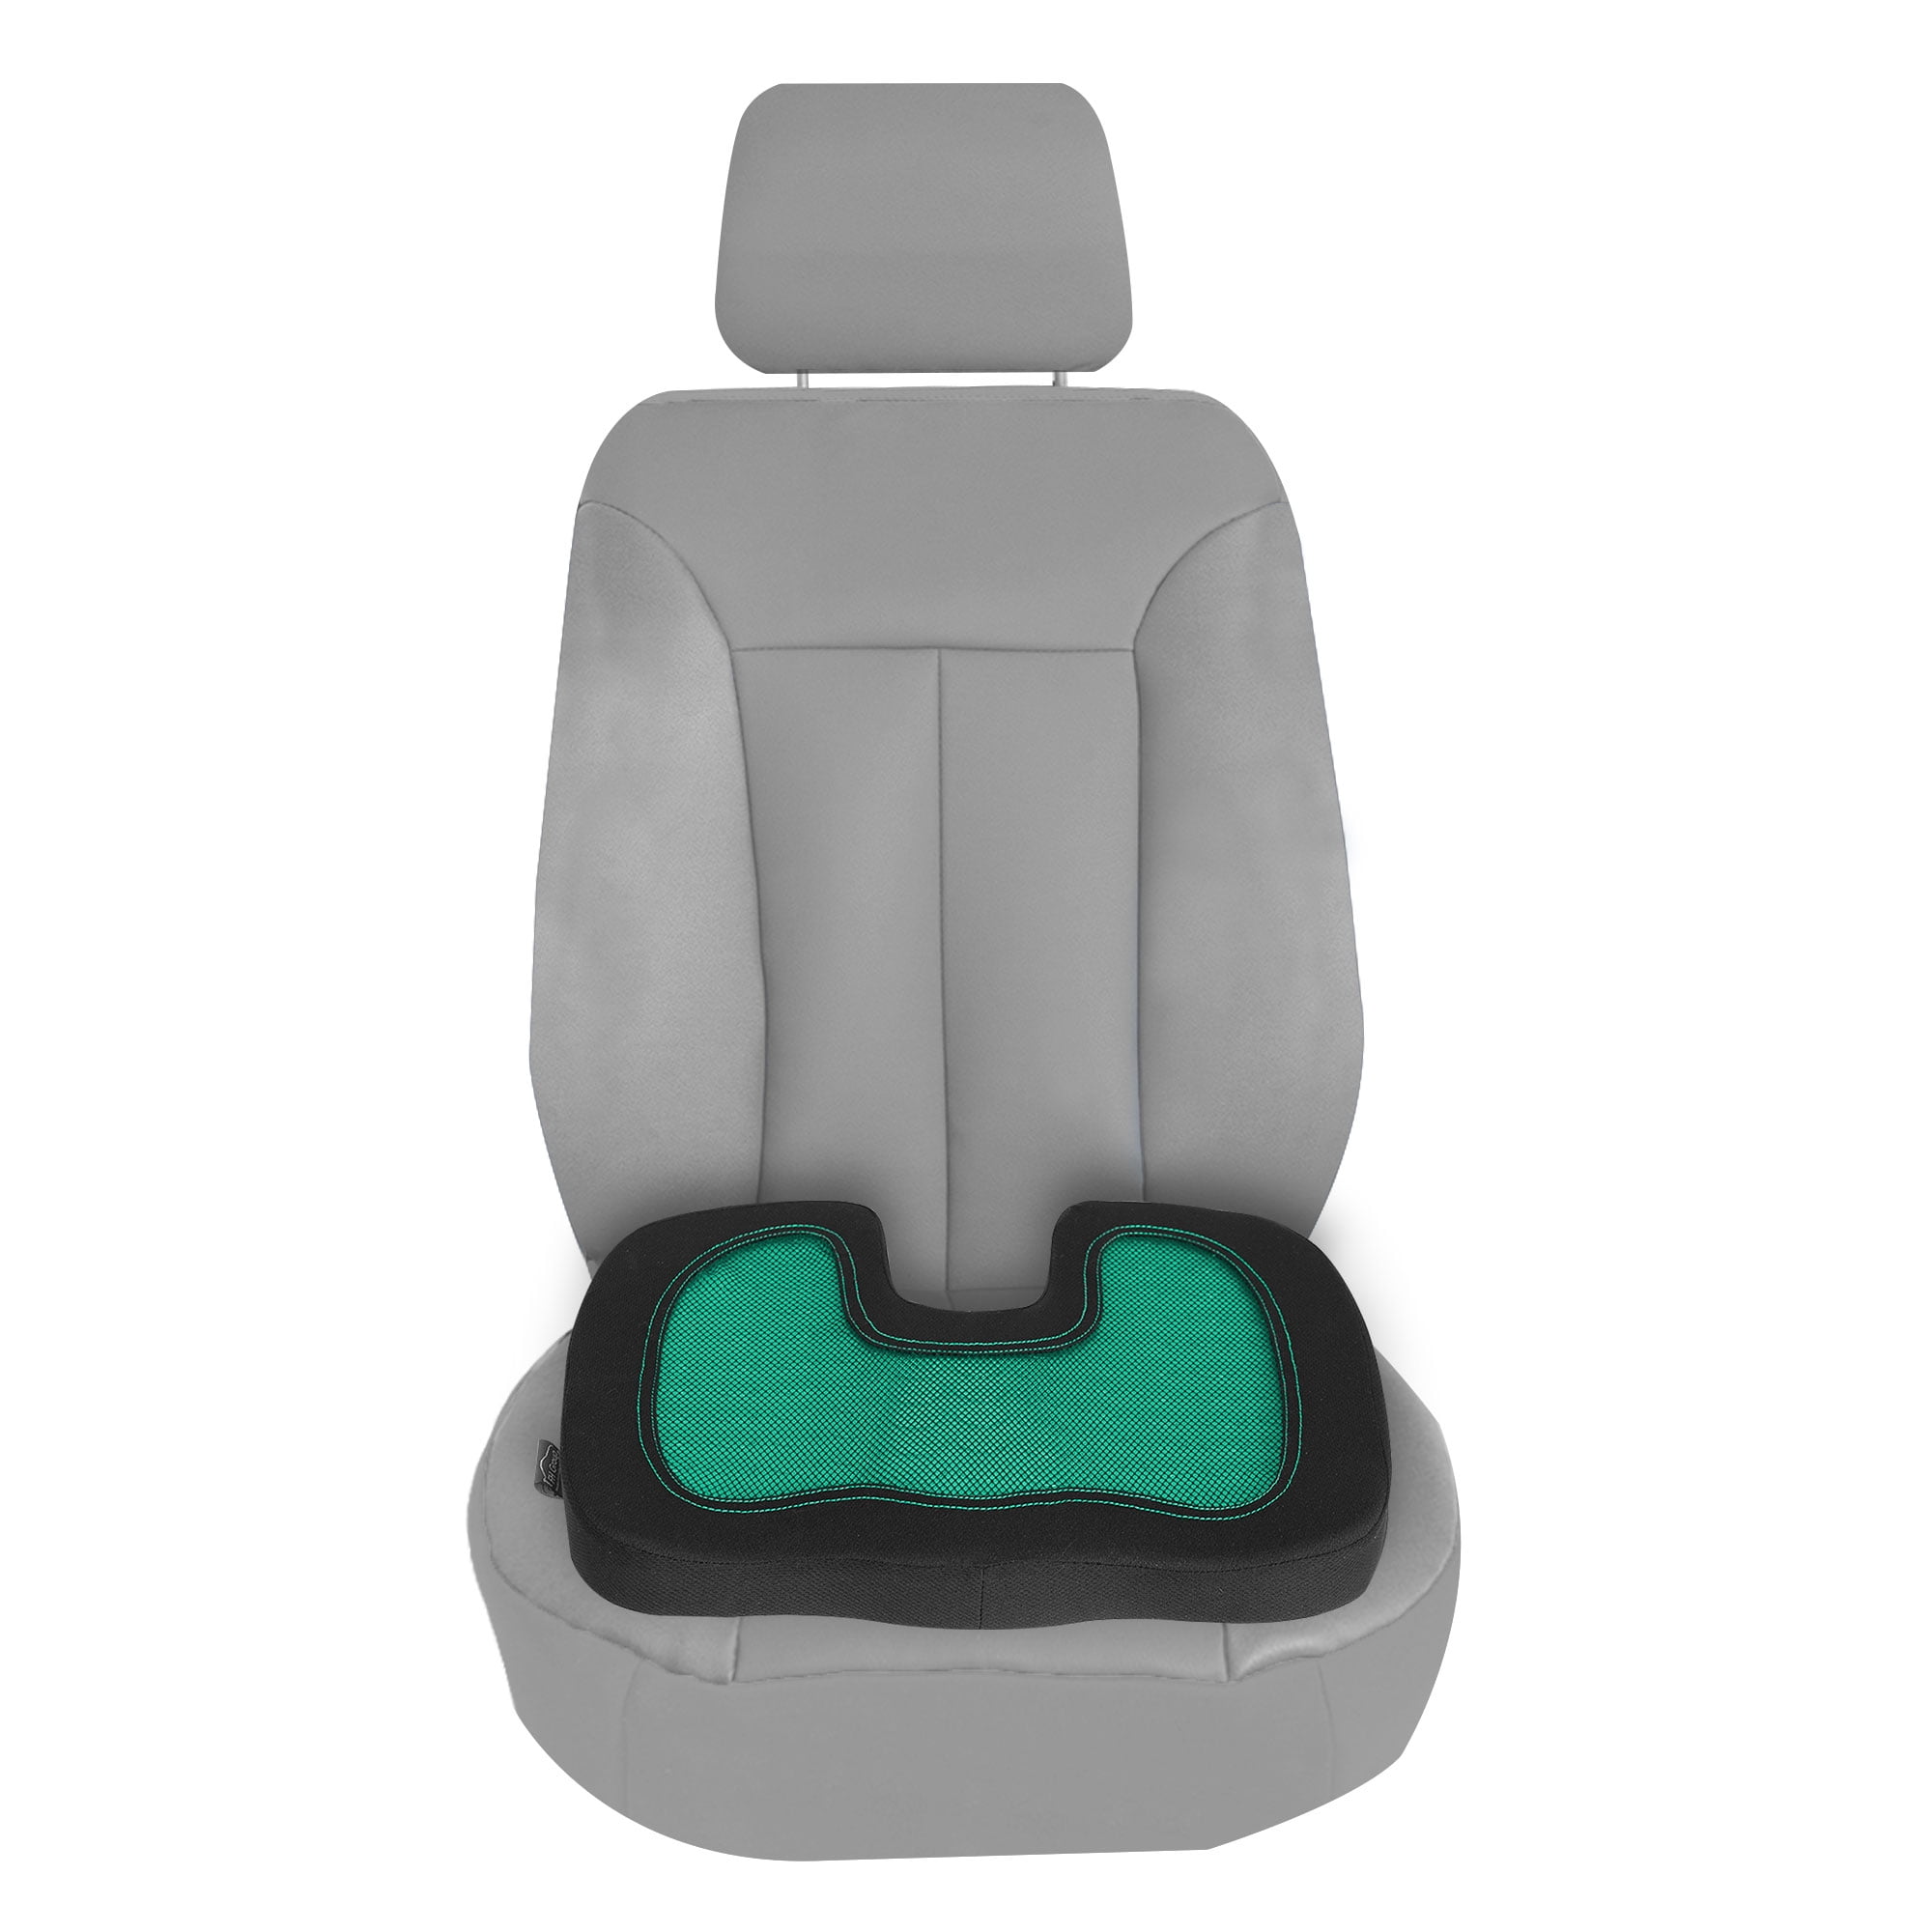 Summer Seat Cushions Office Chair  Car Seat Cushion Pressure Relief -  Summer Seat - Aliexpress